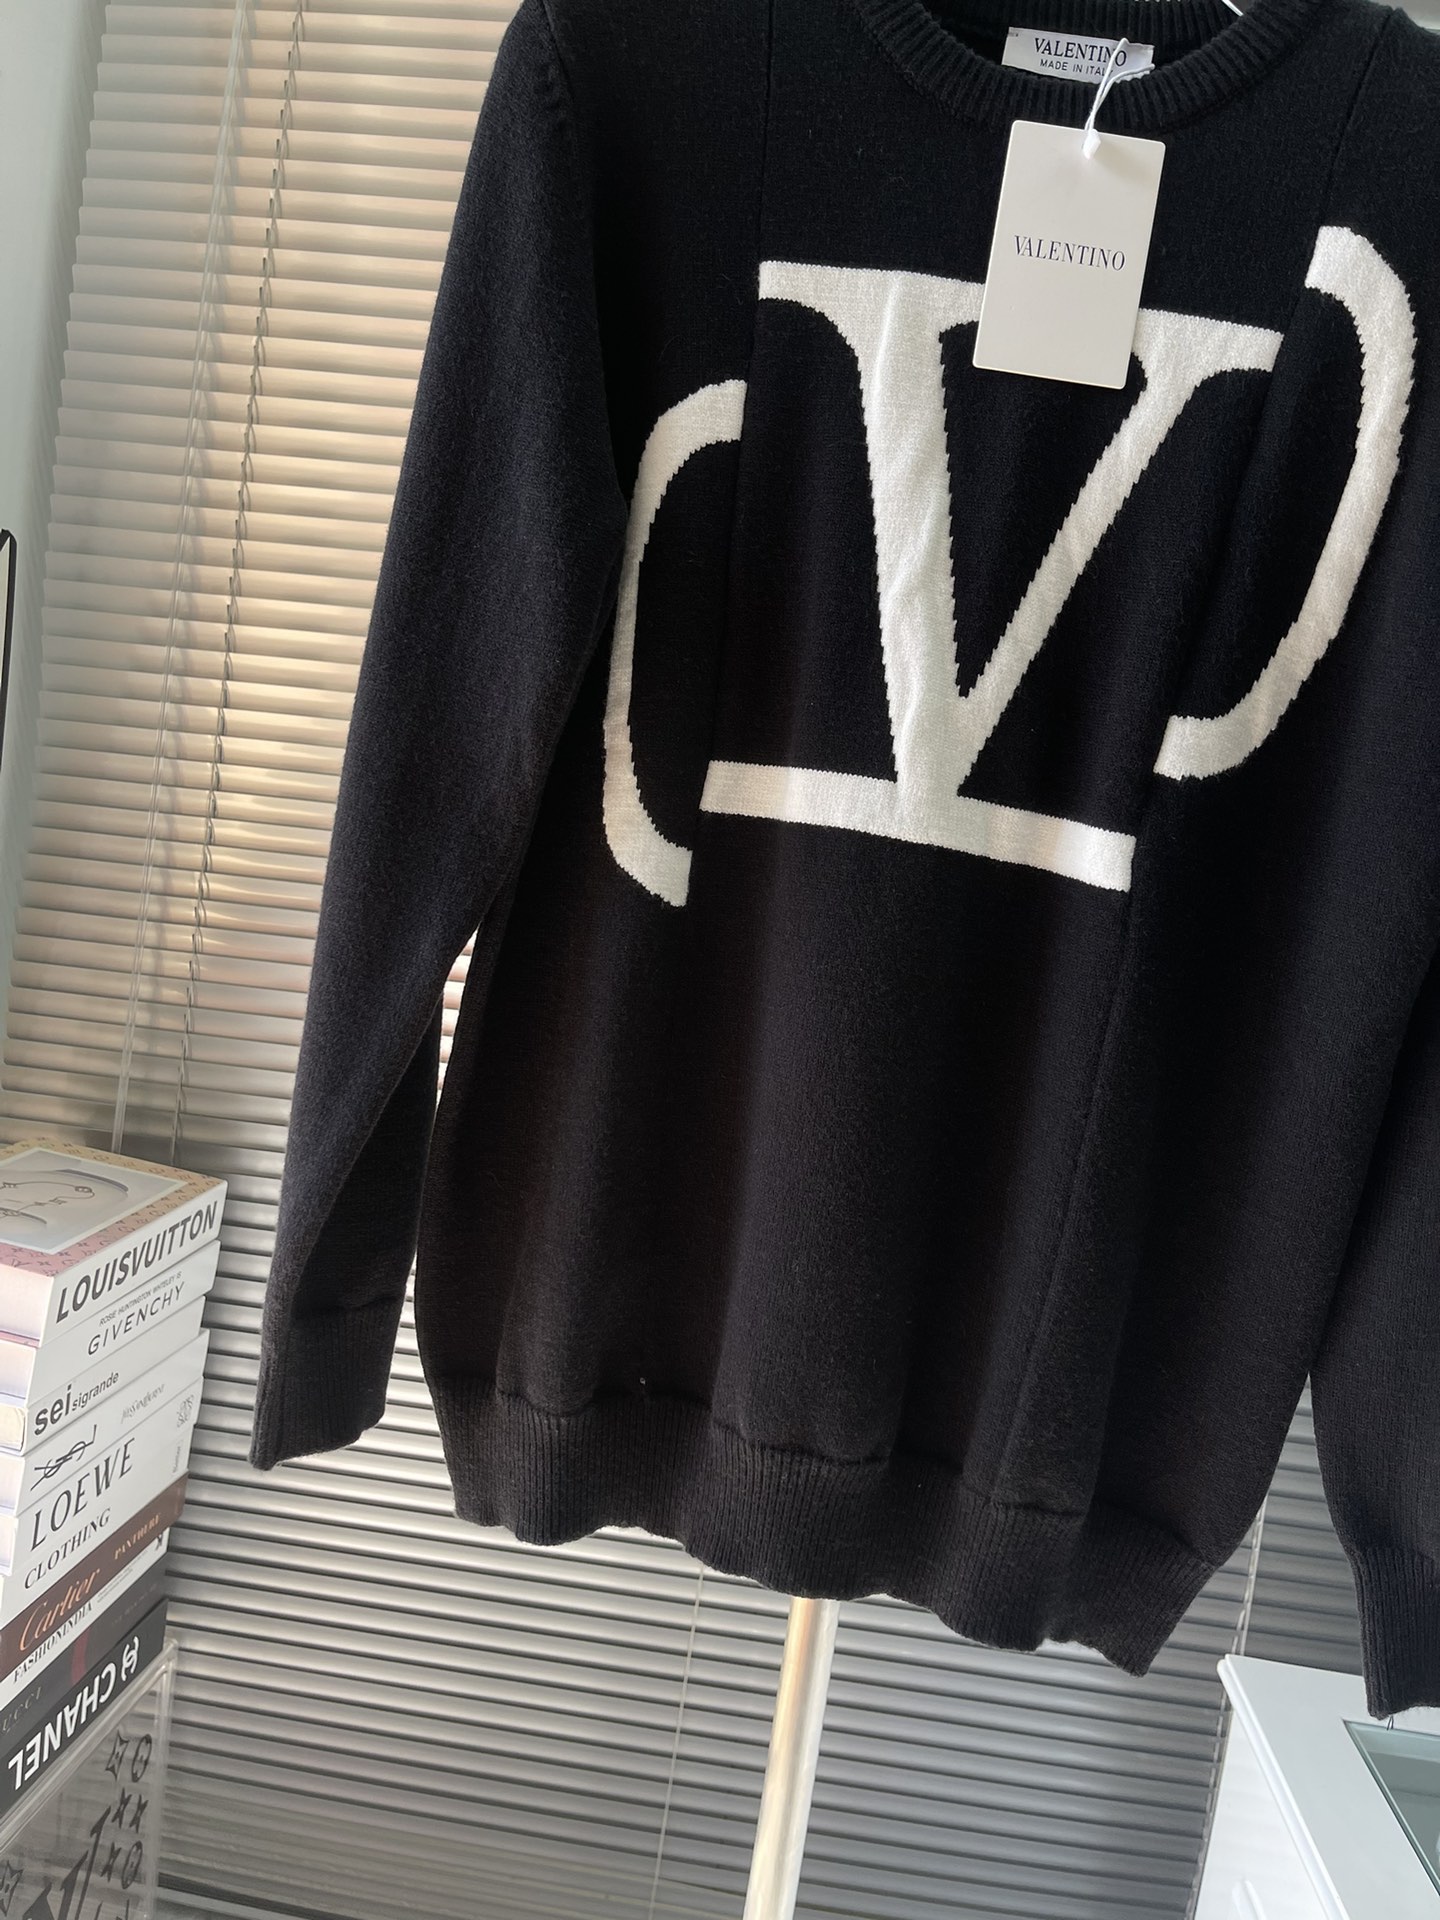 valentino メンズ ヴァレンティノ セーター偽物 HOT品質保証 トップス セーター 柔らかい 保温 暖かい ブラック_3